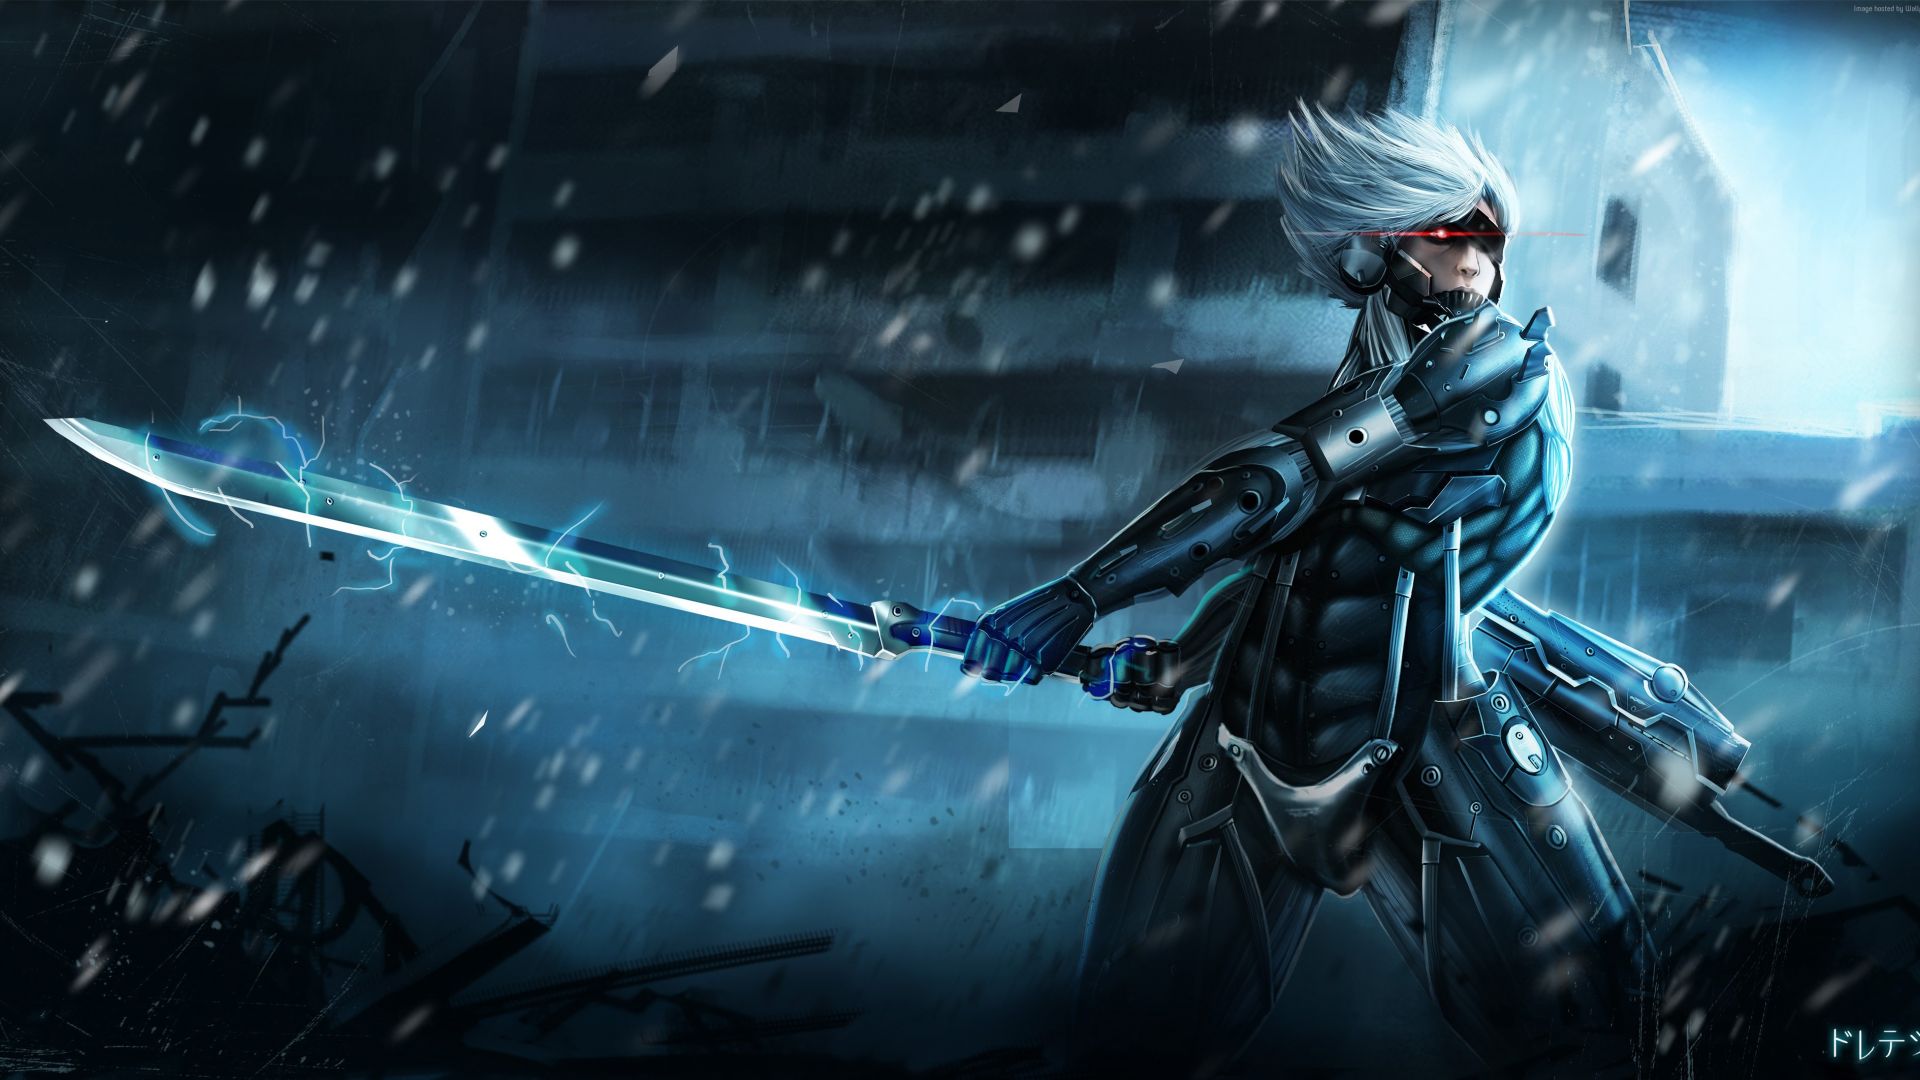 Desktop Wallpaper Metal Gear Rising: Revengeance Video Game, Slash, Sword,  Warrior, Hd Image, Picture, Background, Tajdm7